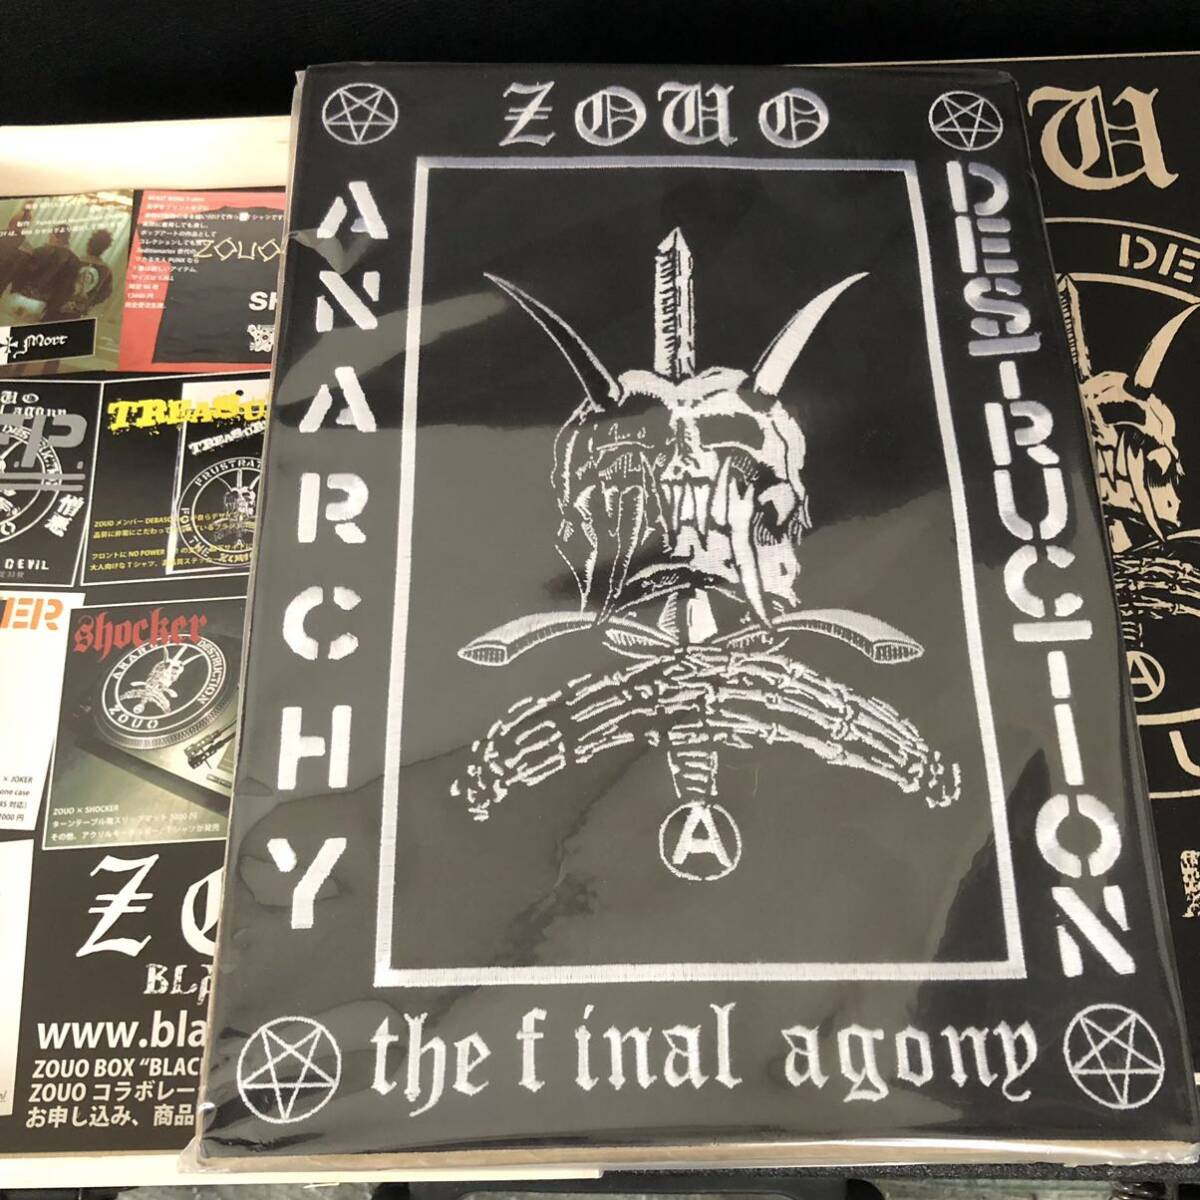 zouo box black lodge 666 limitation BOX set . bad elephant ojapa core punk rock hard core crust hard core hardcore gism gauze swankys life